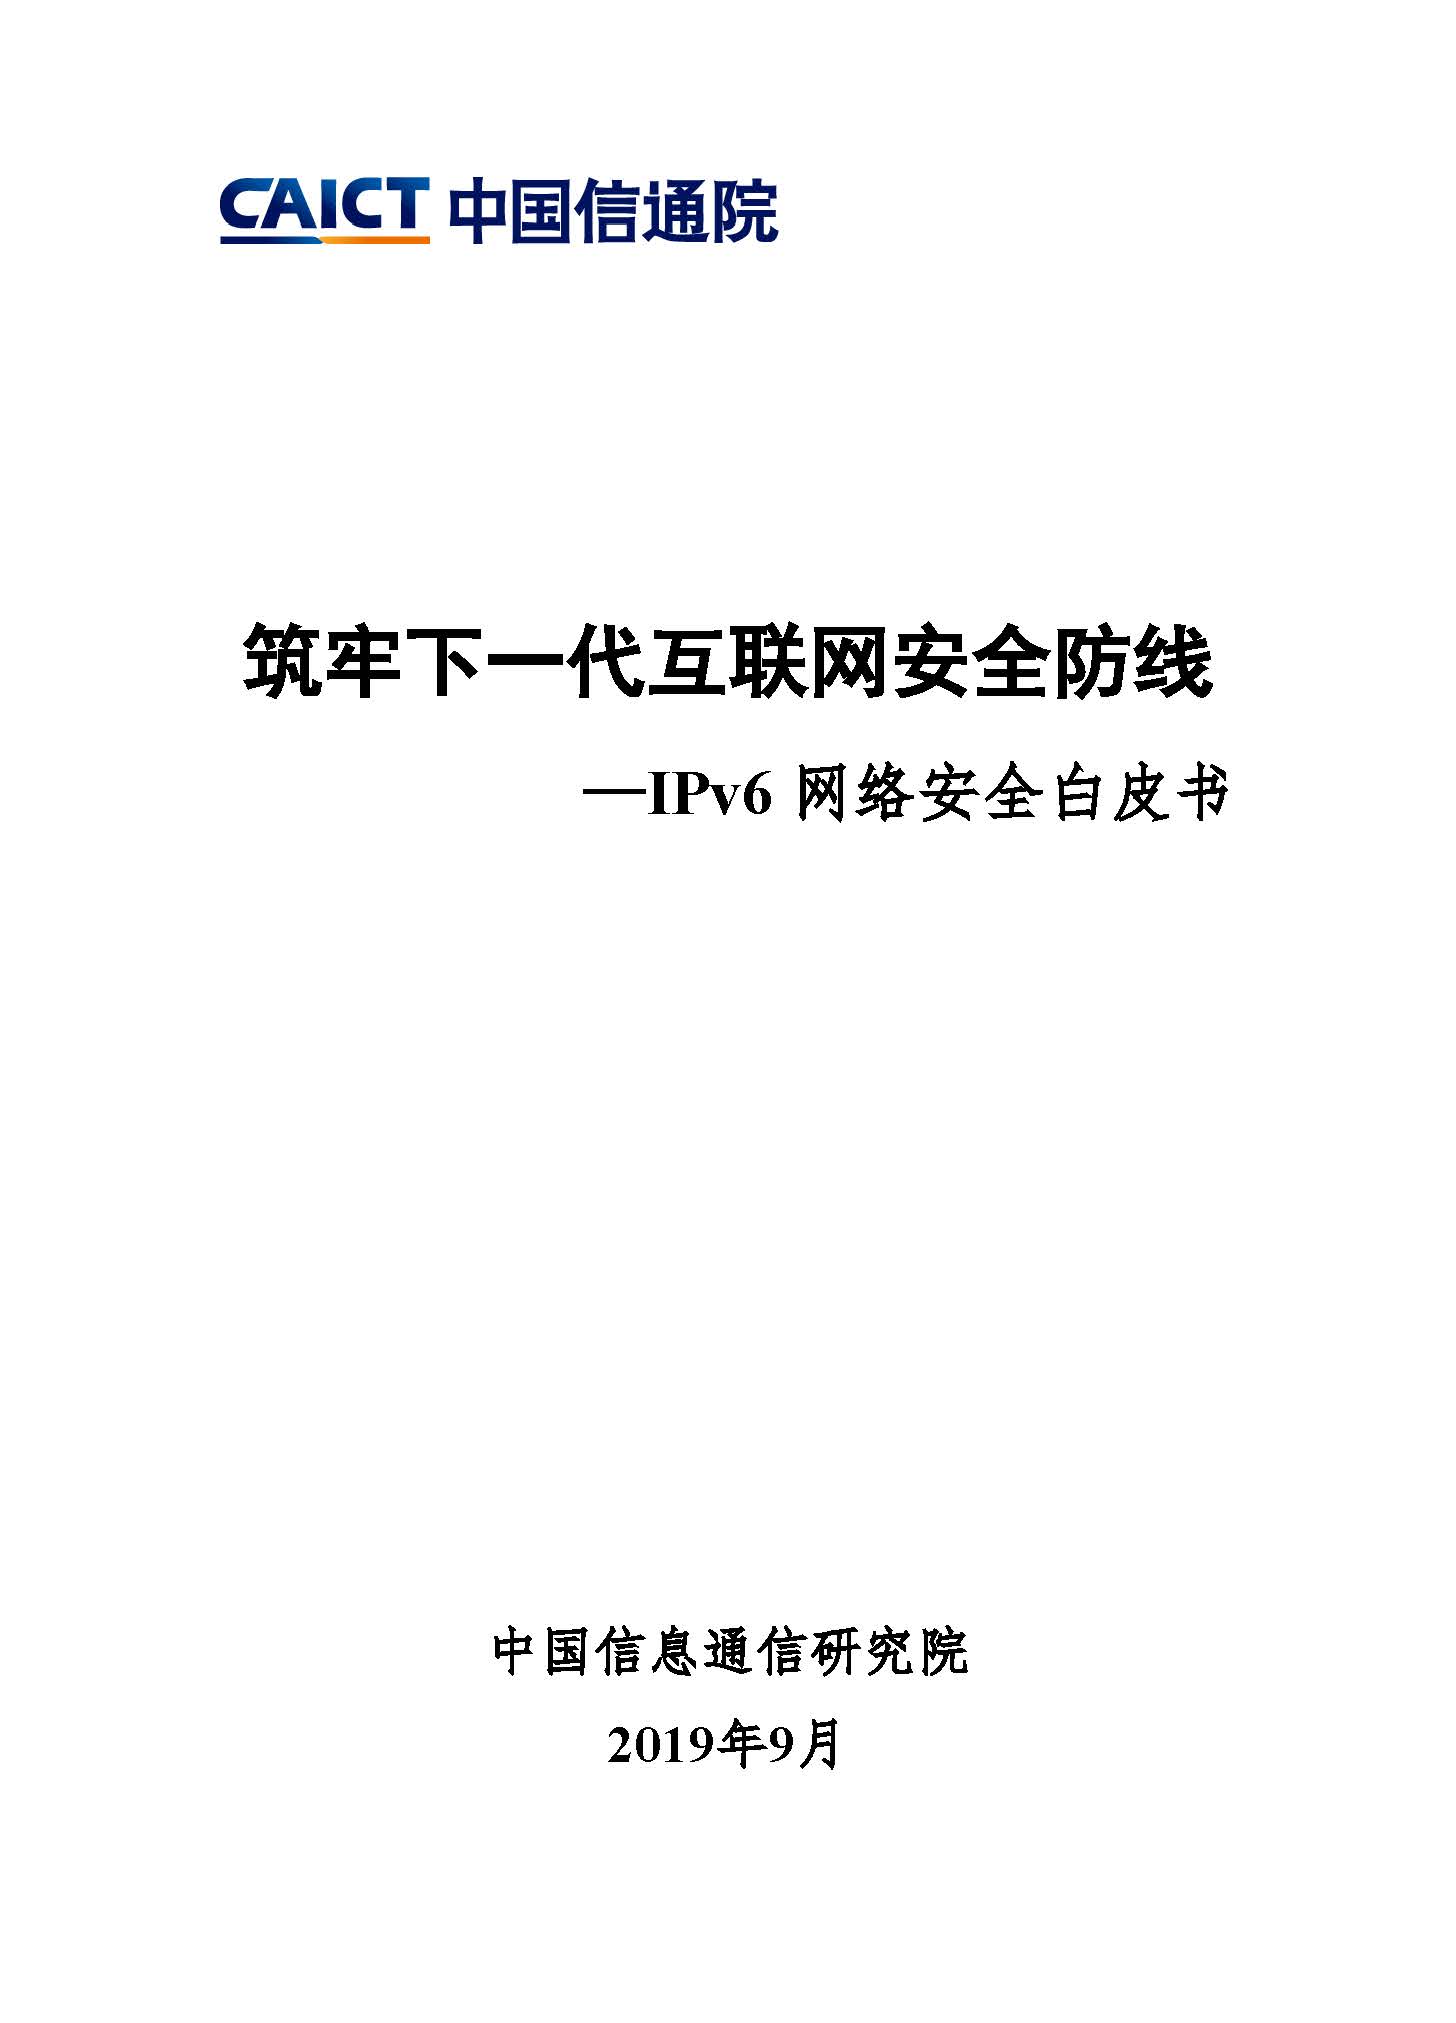 Pages from 筑牢下一代互联网安全防线—IPv6网络安全白皮书.jpg